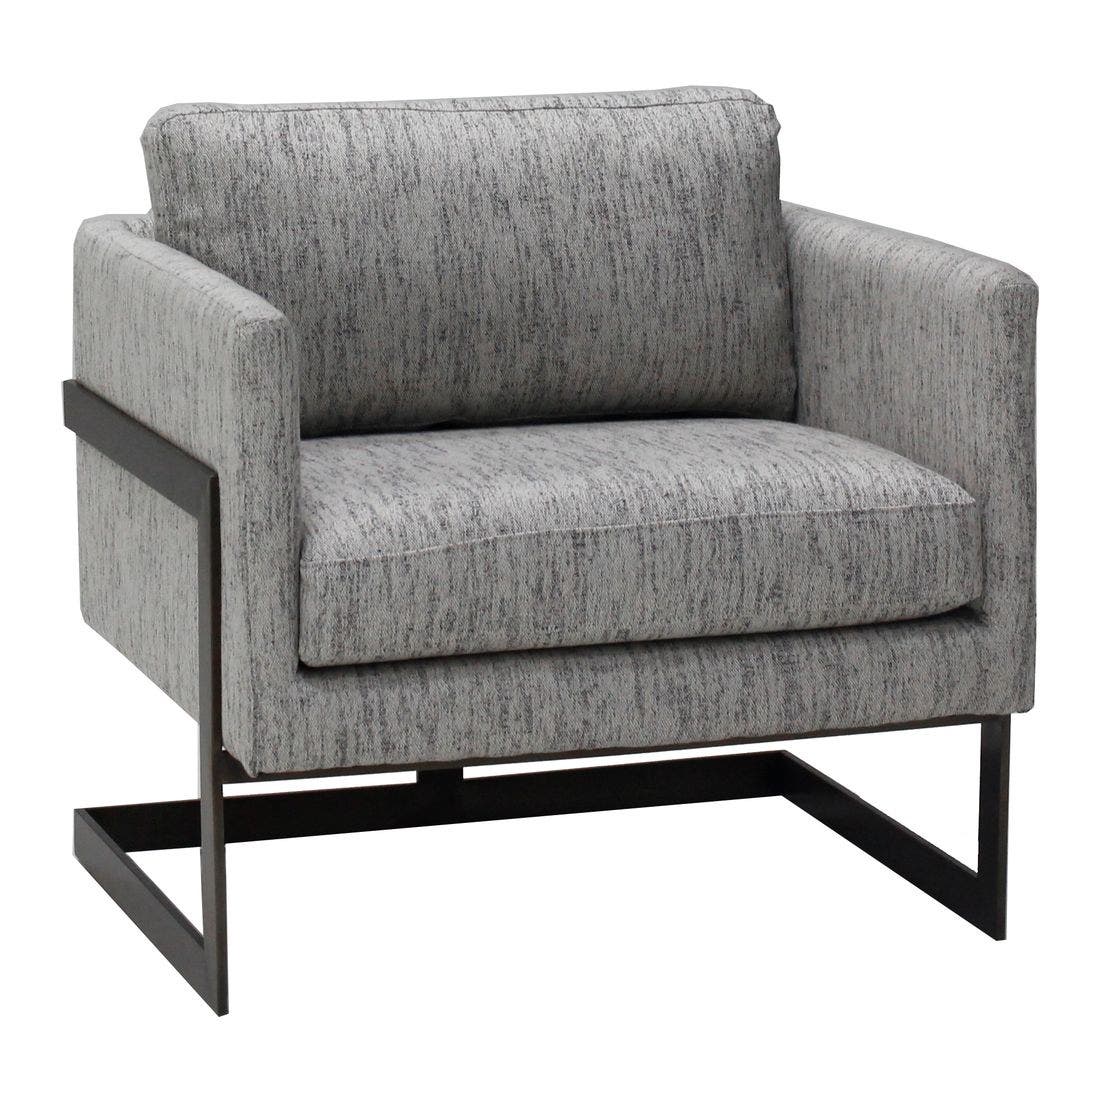 19156008-ashbury-furniture-sofa-recliner-armchairs-06